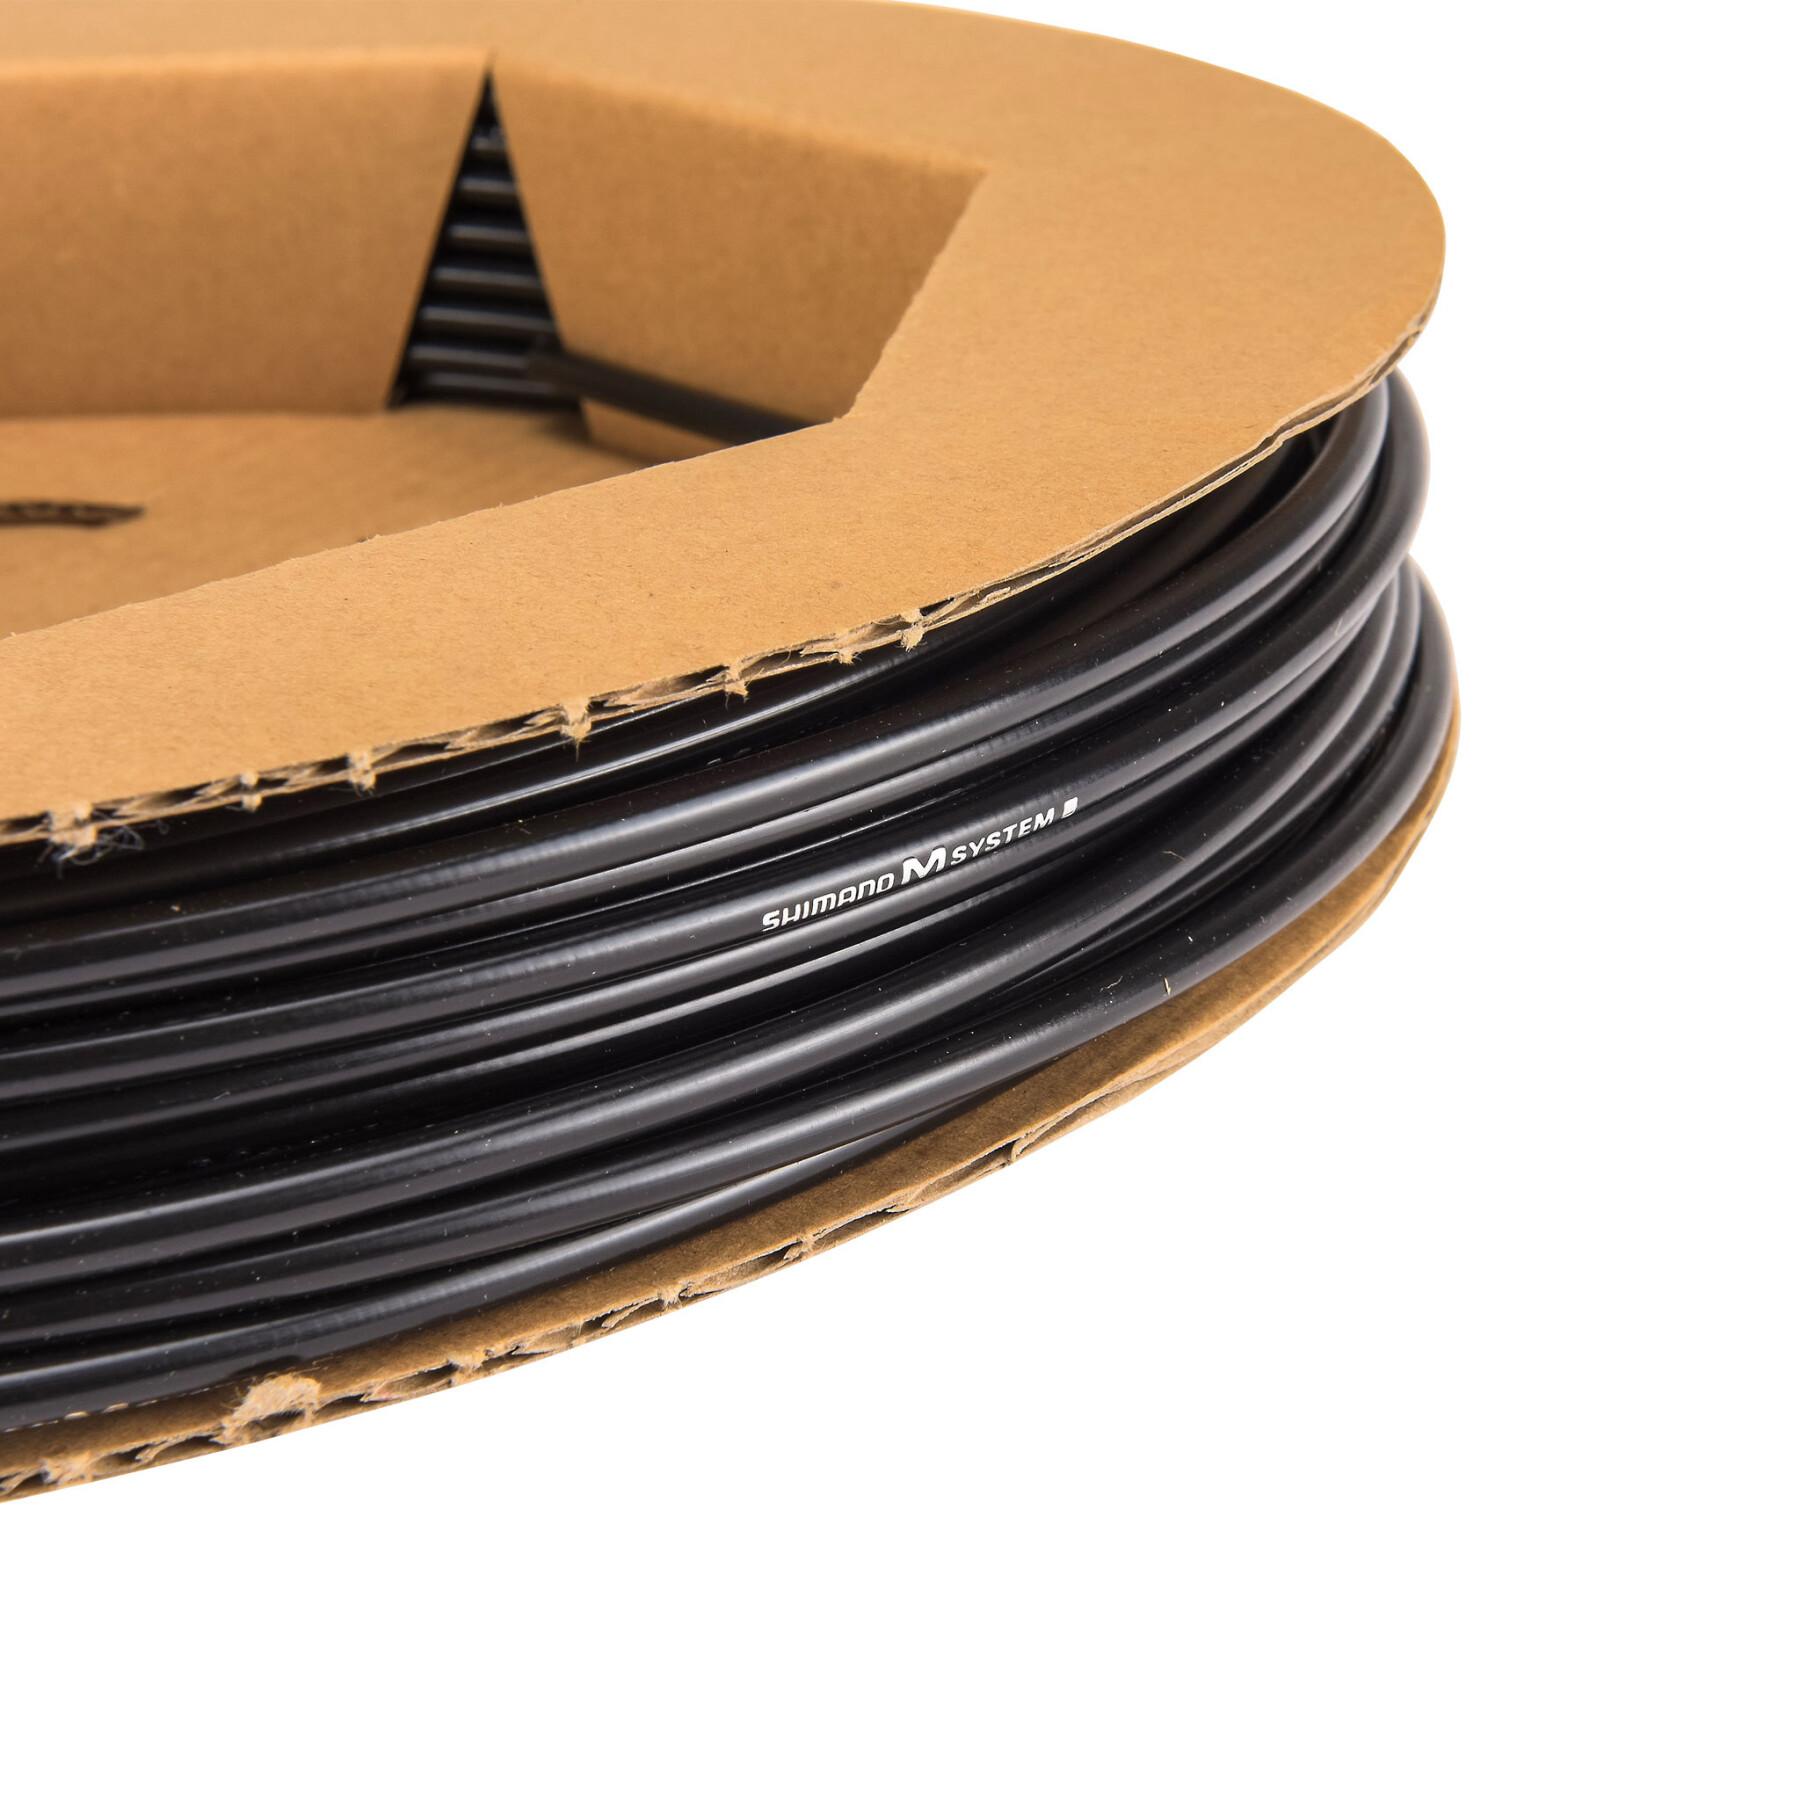 Brake cable sheath Shimano 5 mm (40m)